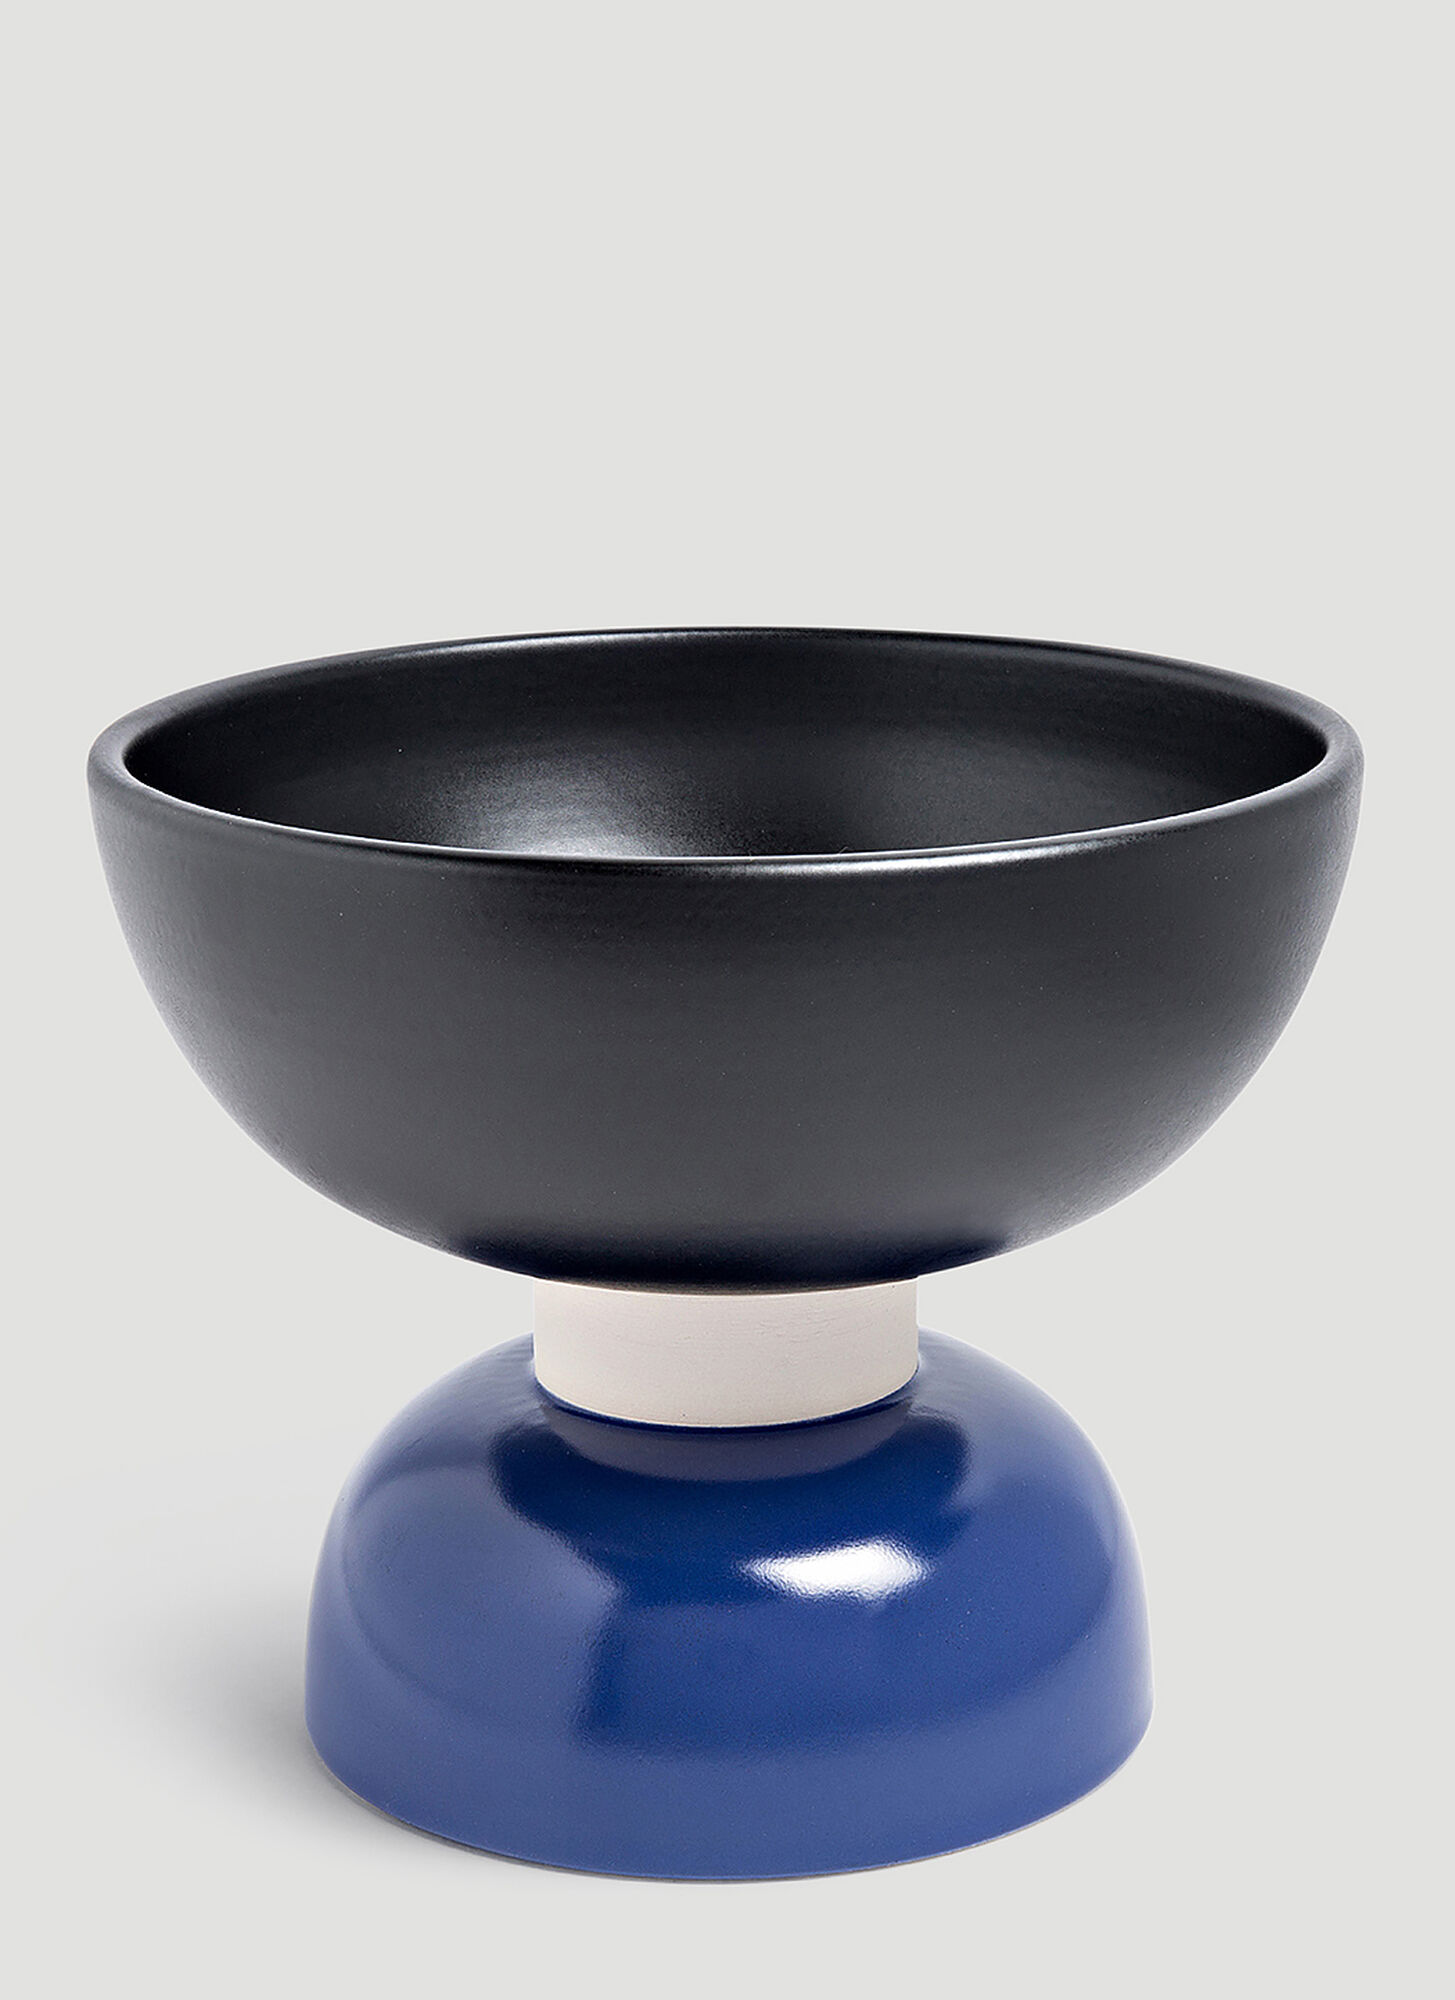  Bitossi Ceramiche Bitossi Ceramiche Footed Bowl -  Ceramics Black One Size 